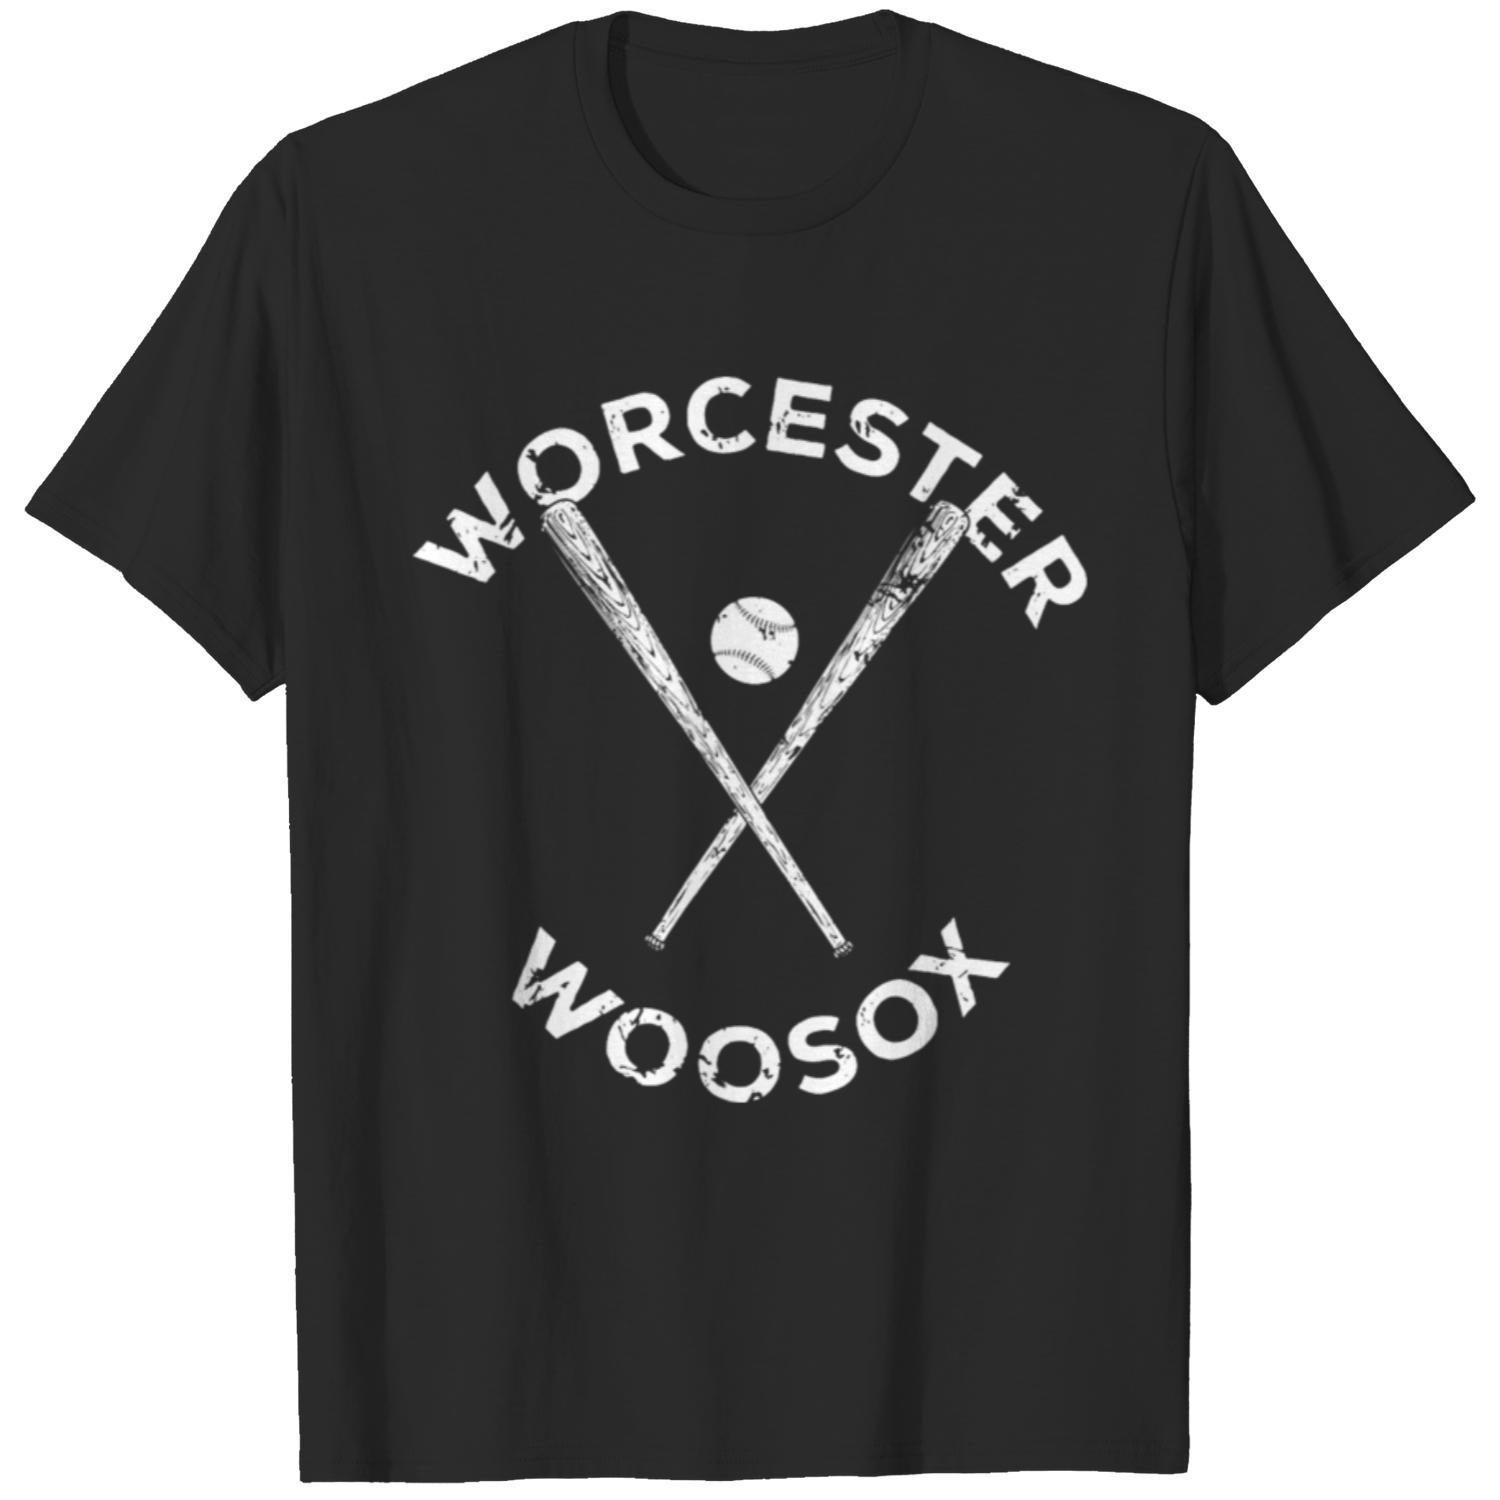 Worcester Woosox Baseball Triple - Baseball - T-Shirt